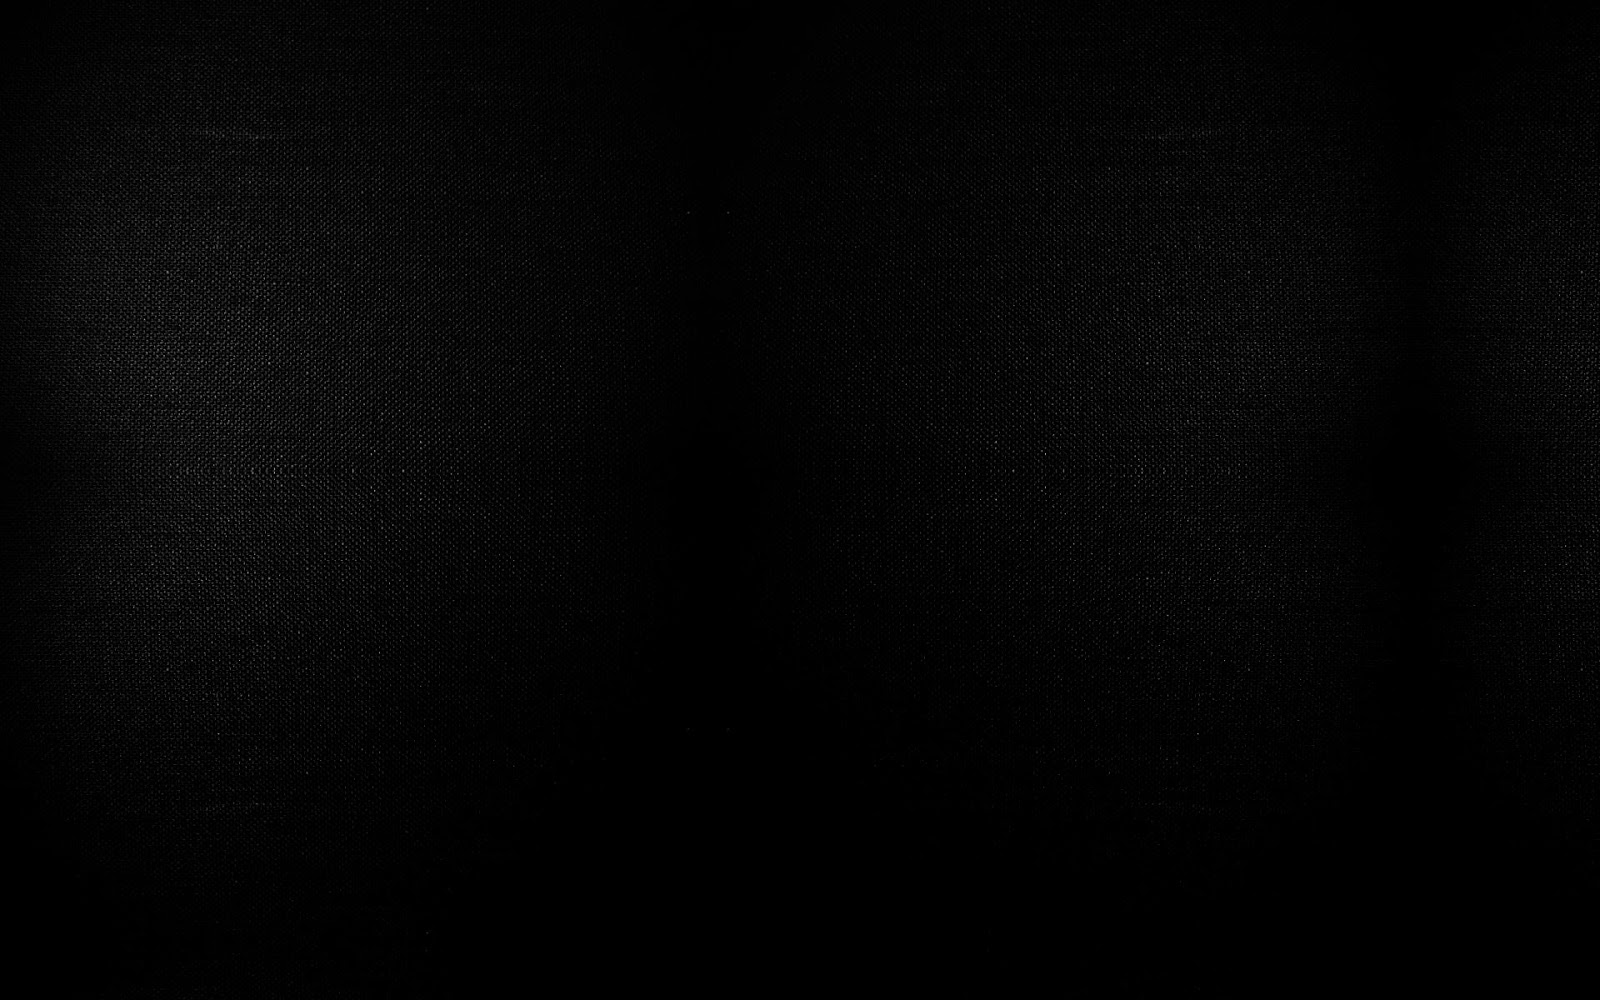 Free download black background black background black background black